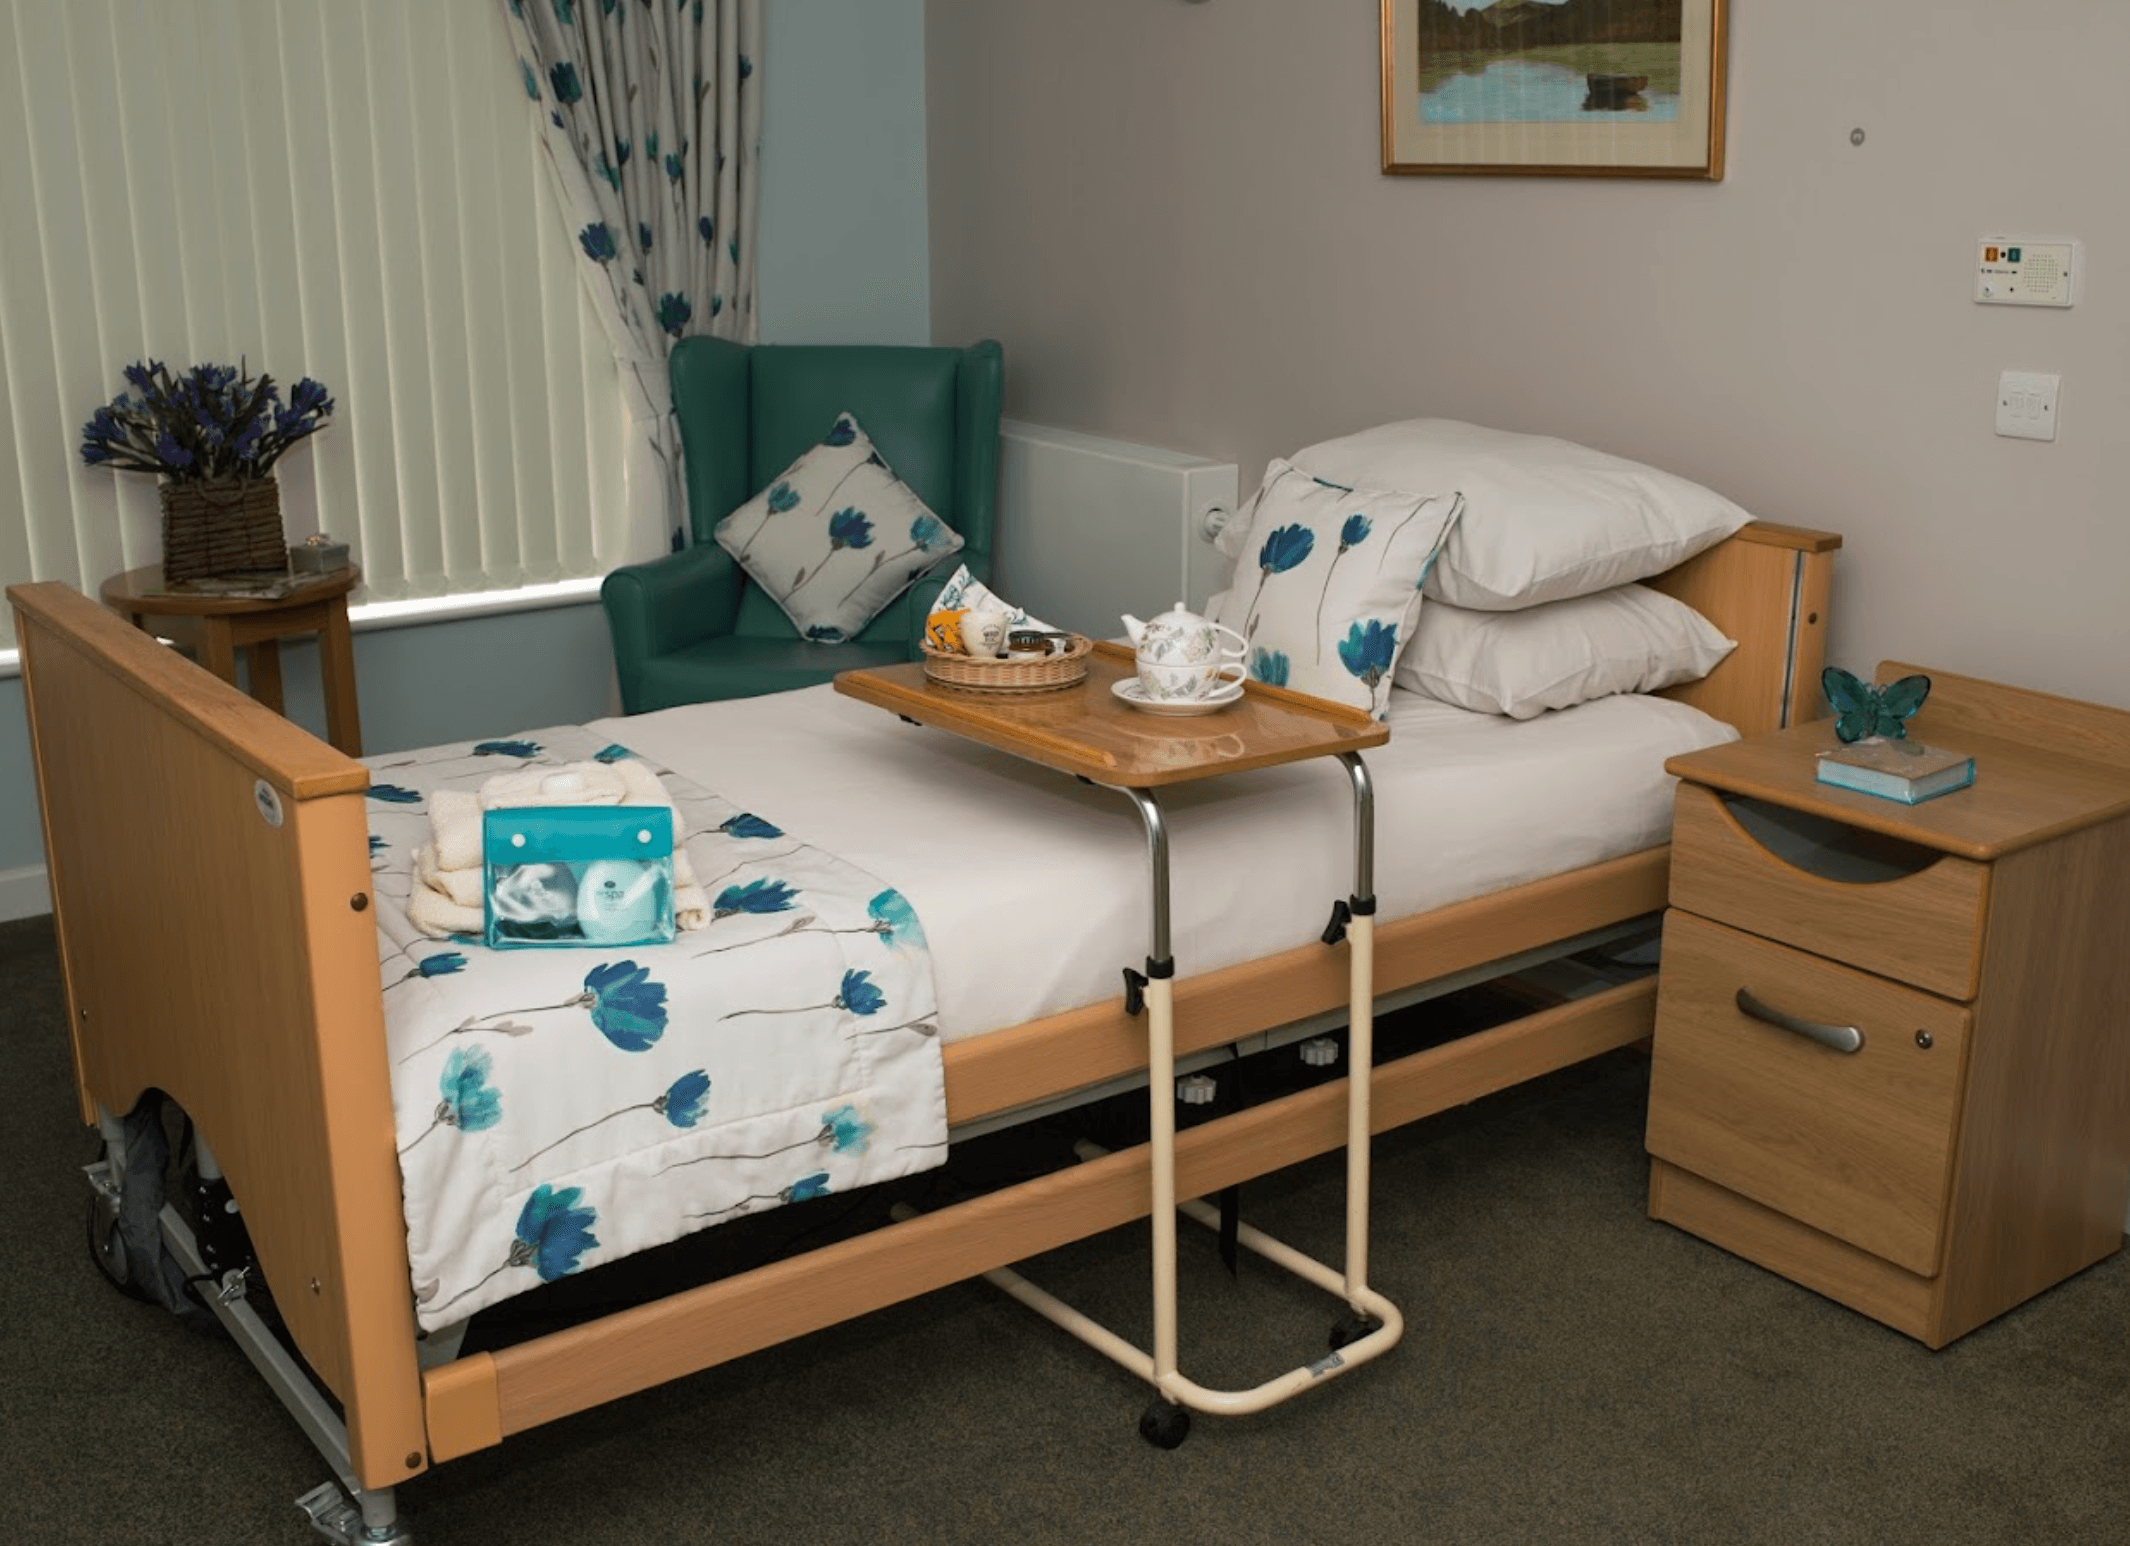 Bedroom of Atholl House nursing home in Compton, Wolverhampton